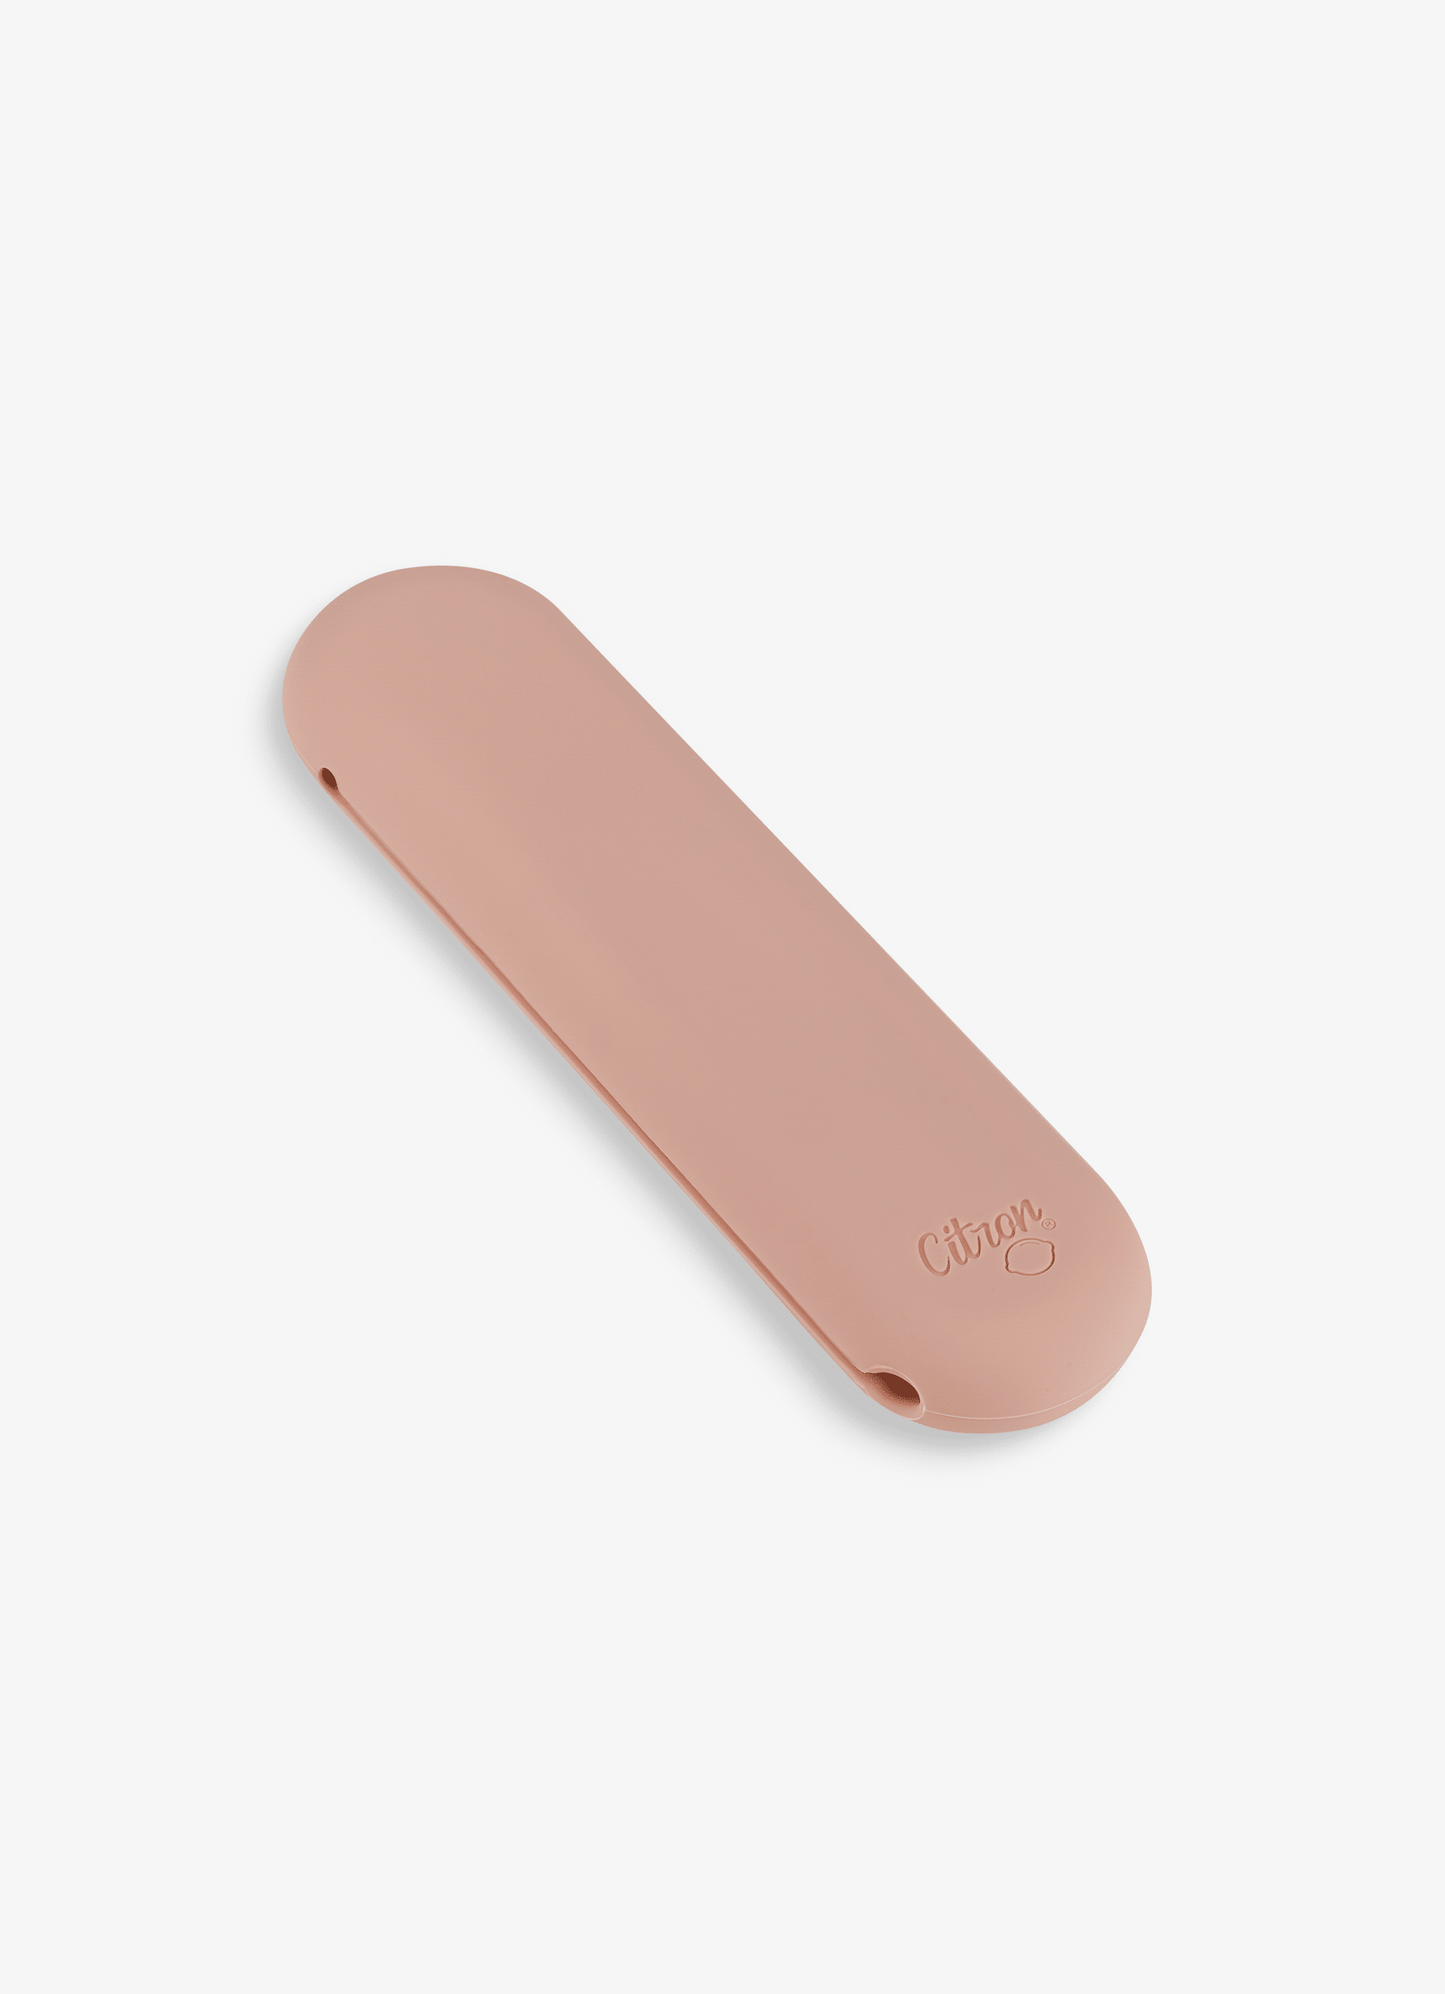 Bio-Based Cutlery - set of 5 - Pink/ Cream + Case